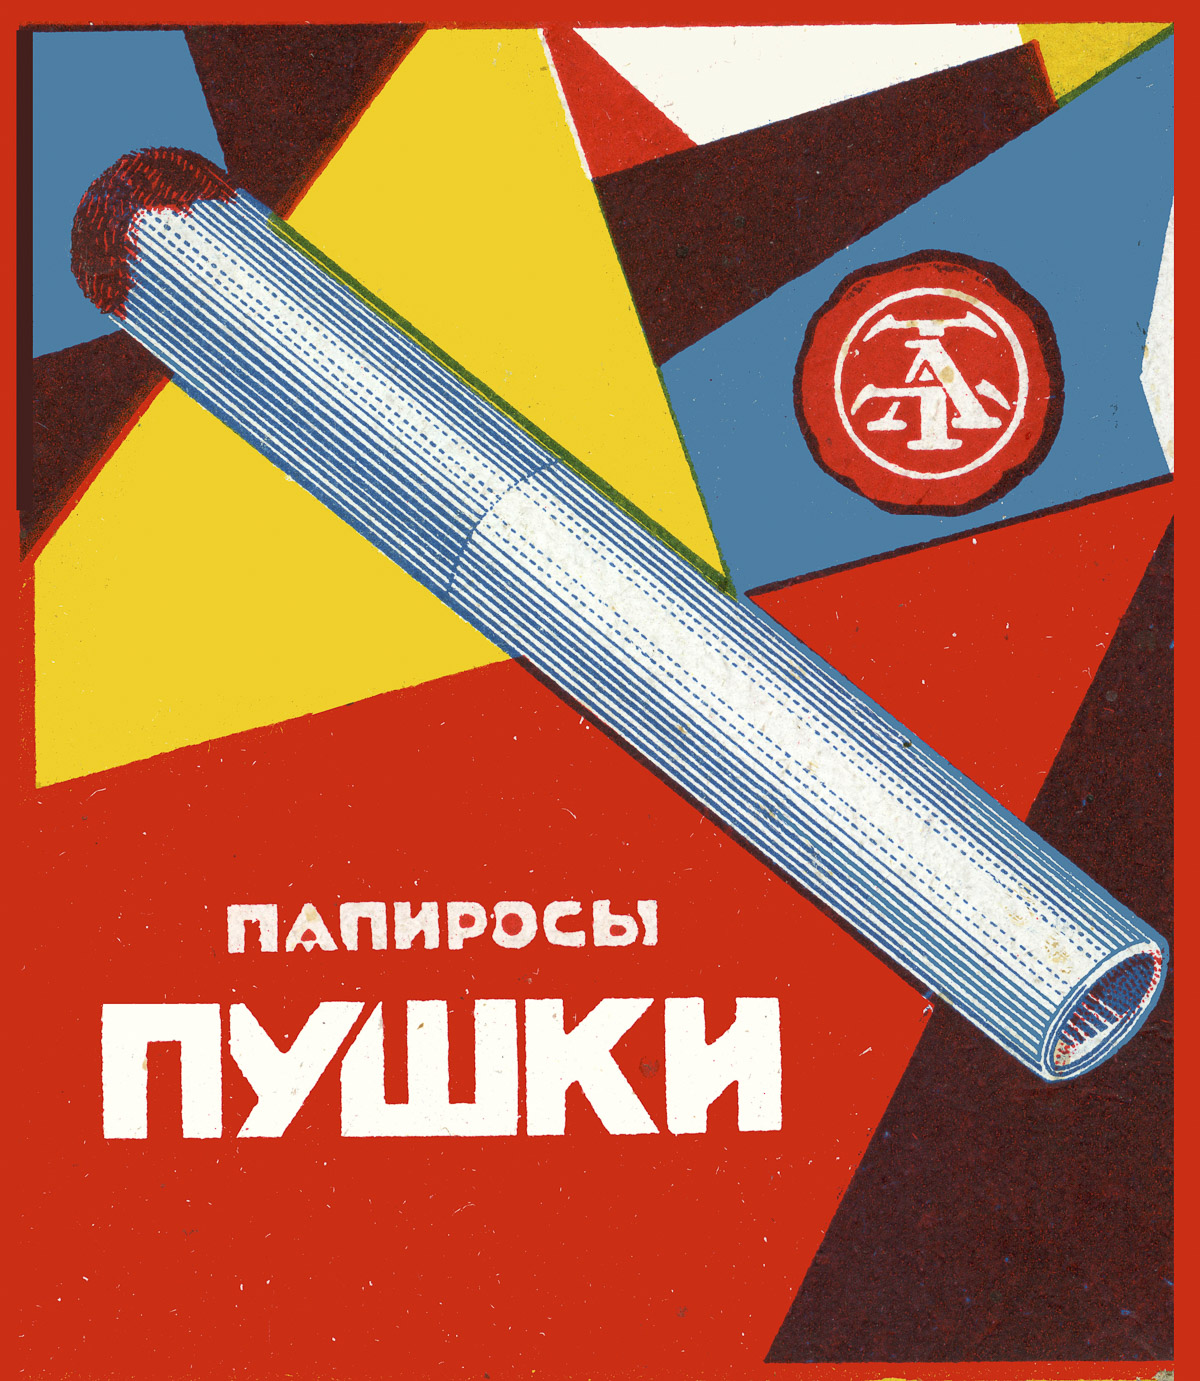 Sovetskaya reklama sigaret 16